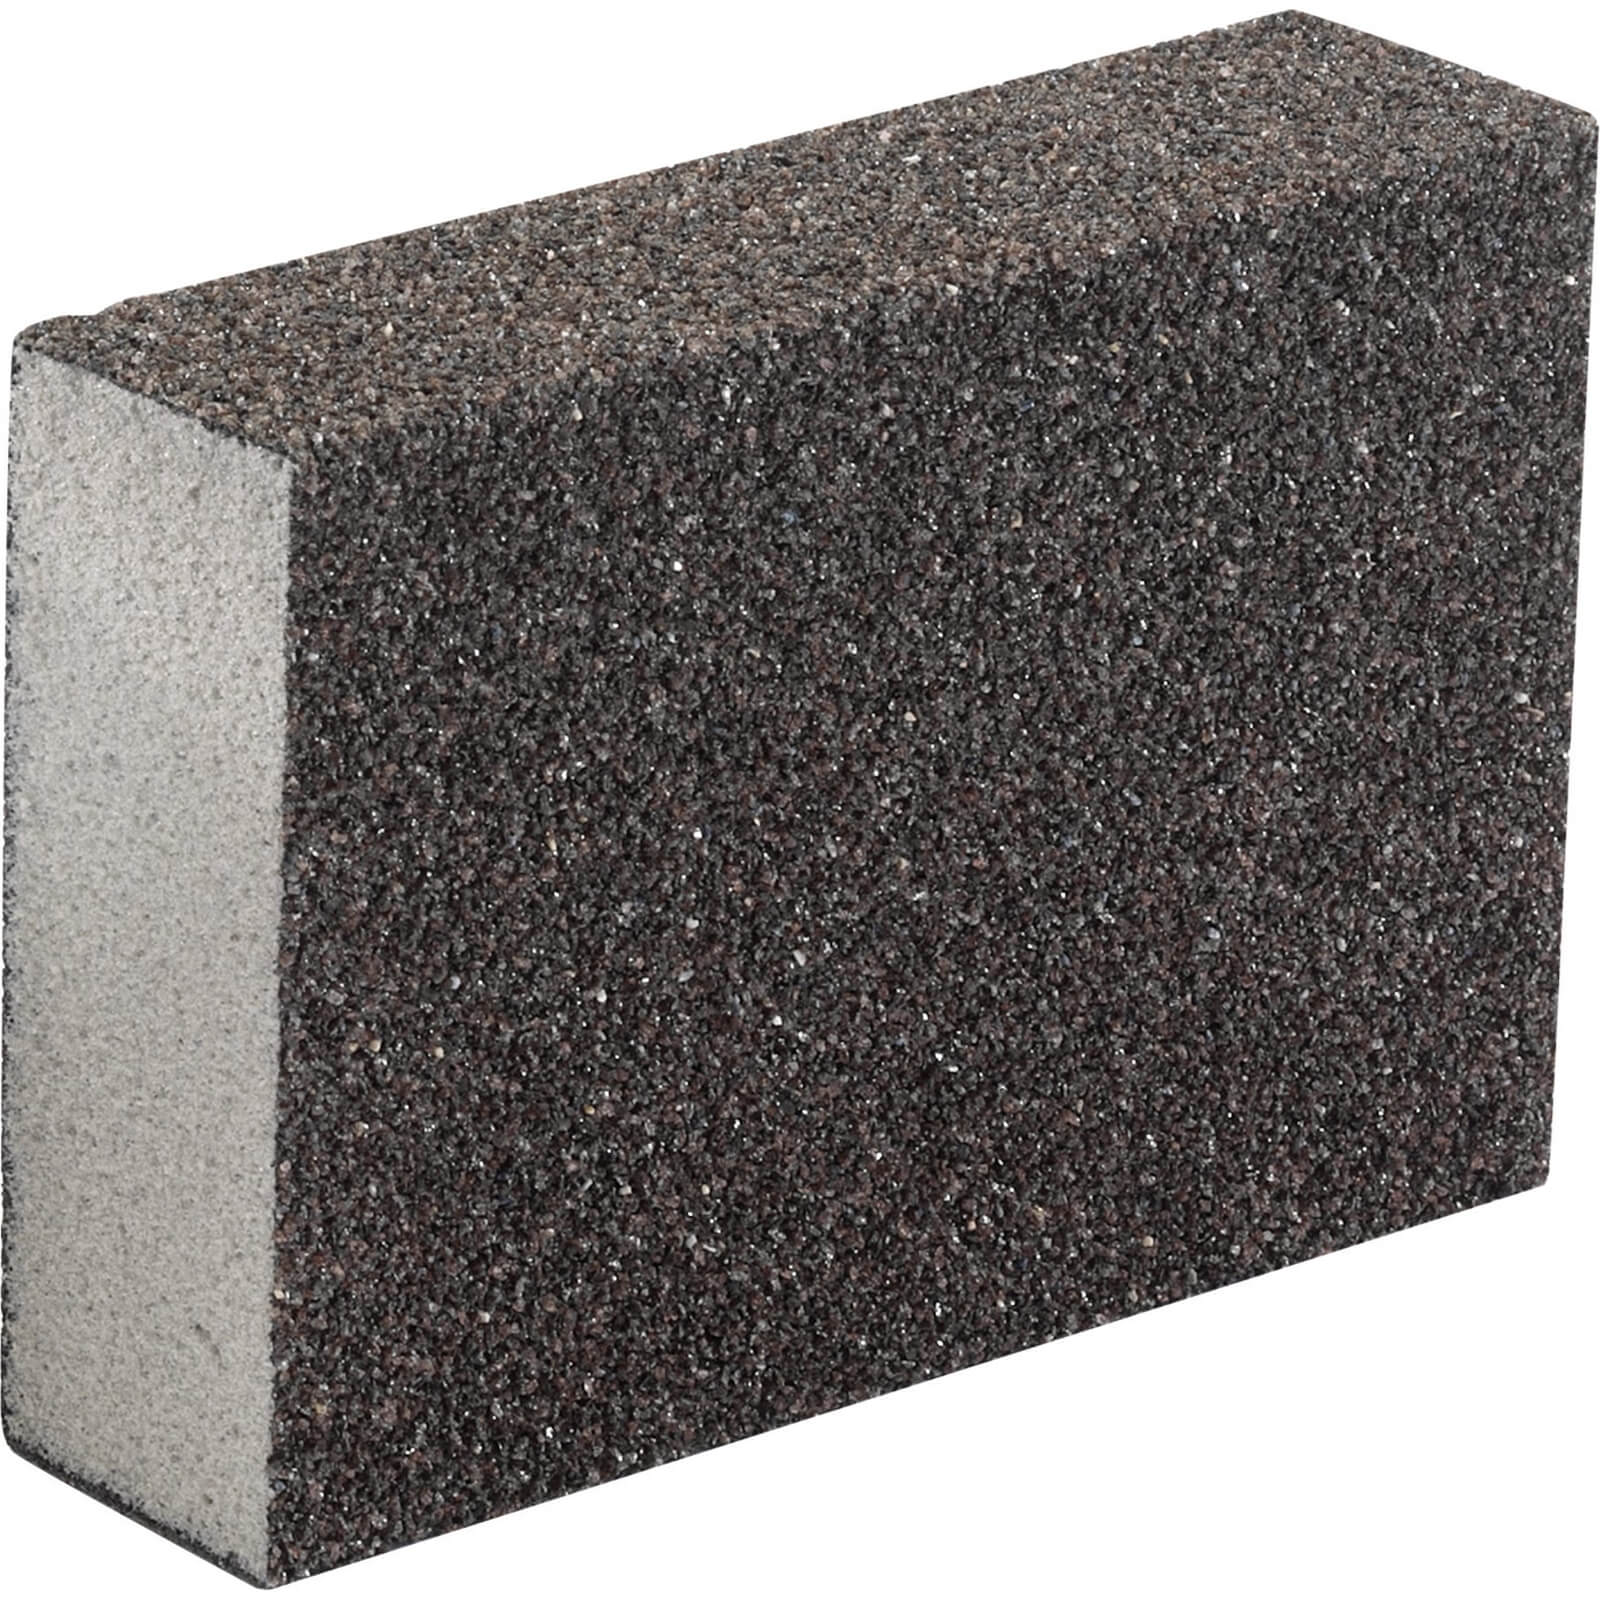 Image of Draper Flexible Abrasive Sanding Sponge Medium/Coarse